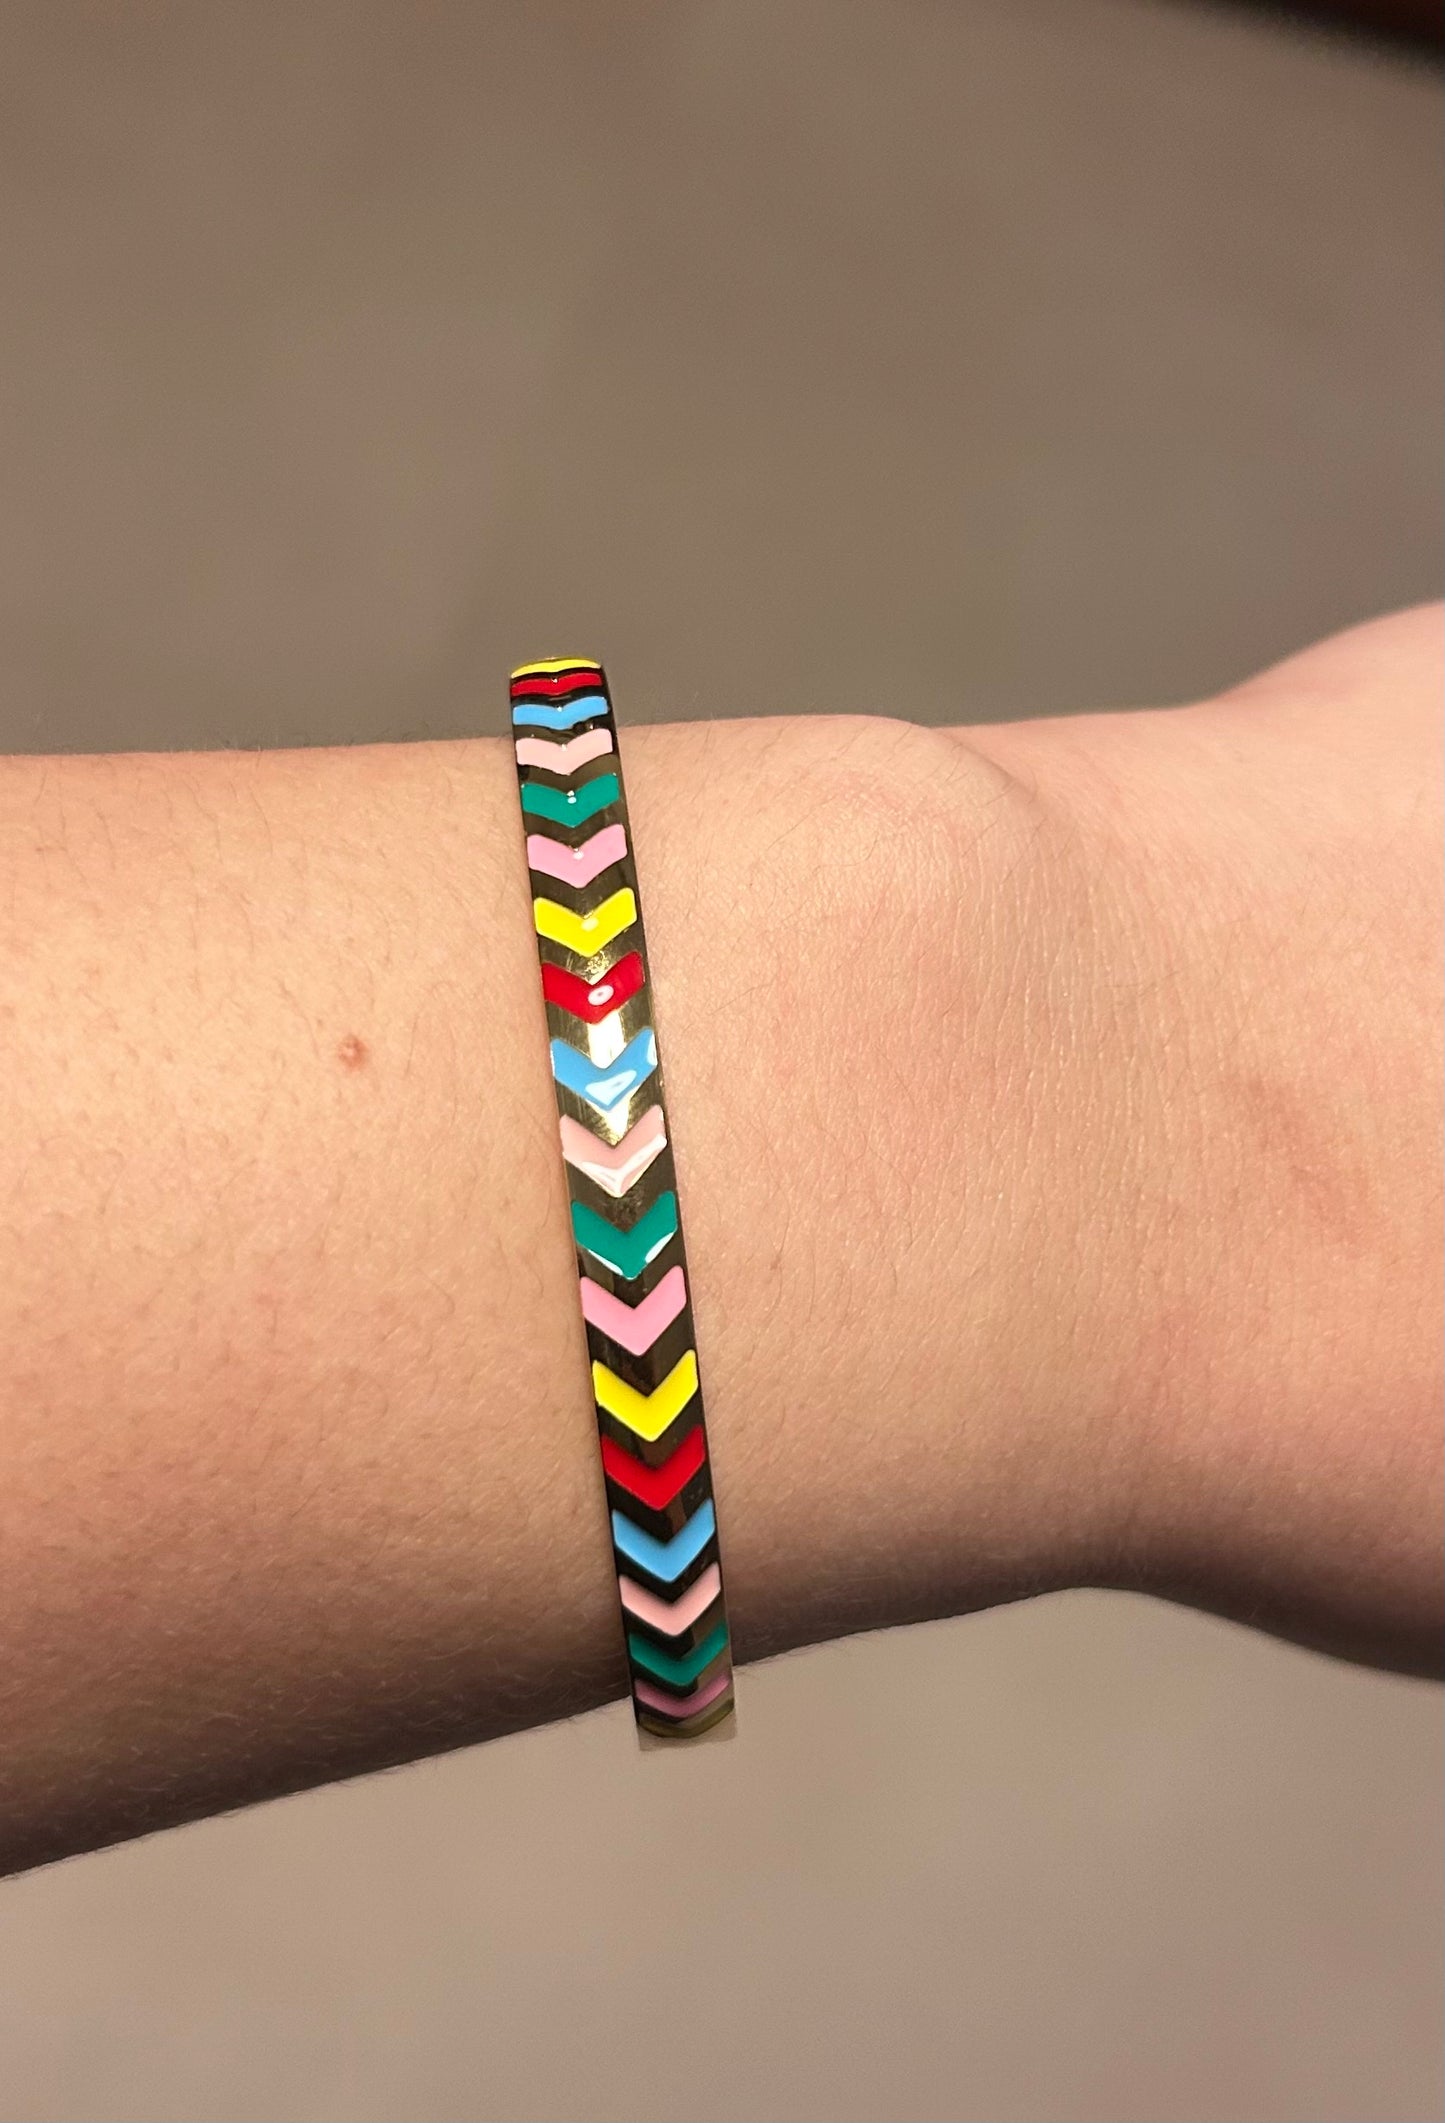 Colored bracelet